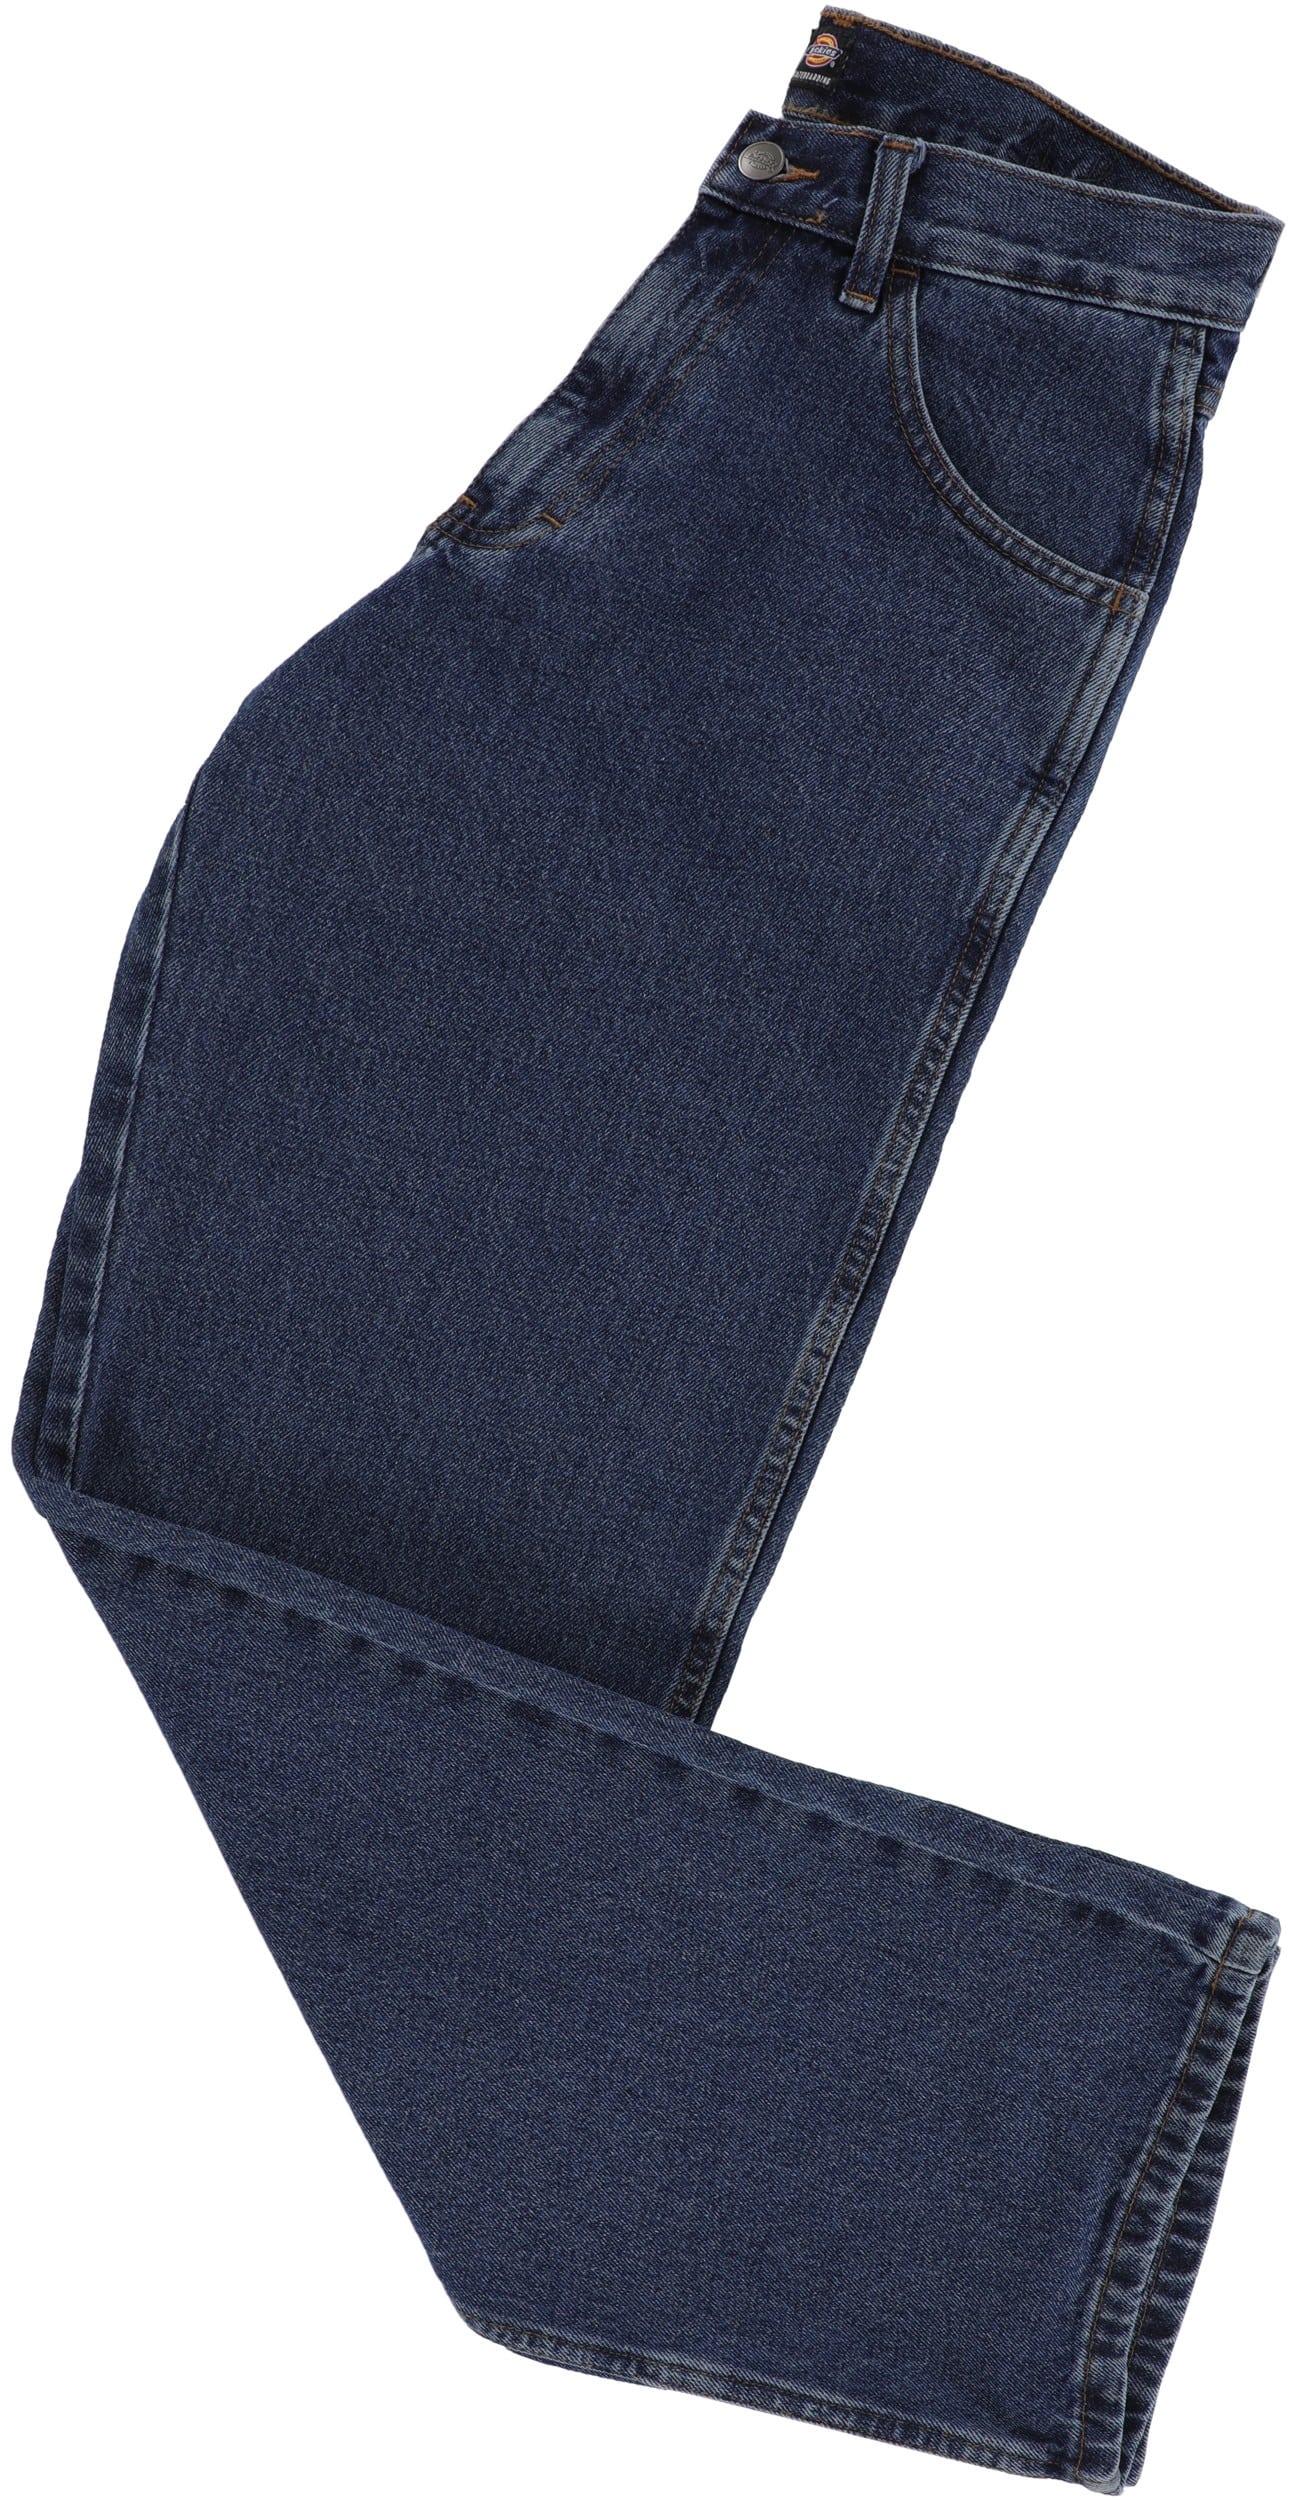 Dickies Jake Hayes Jeans - stonewashed vintage blue | Tactics